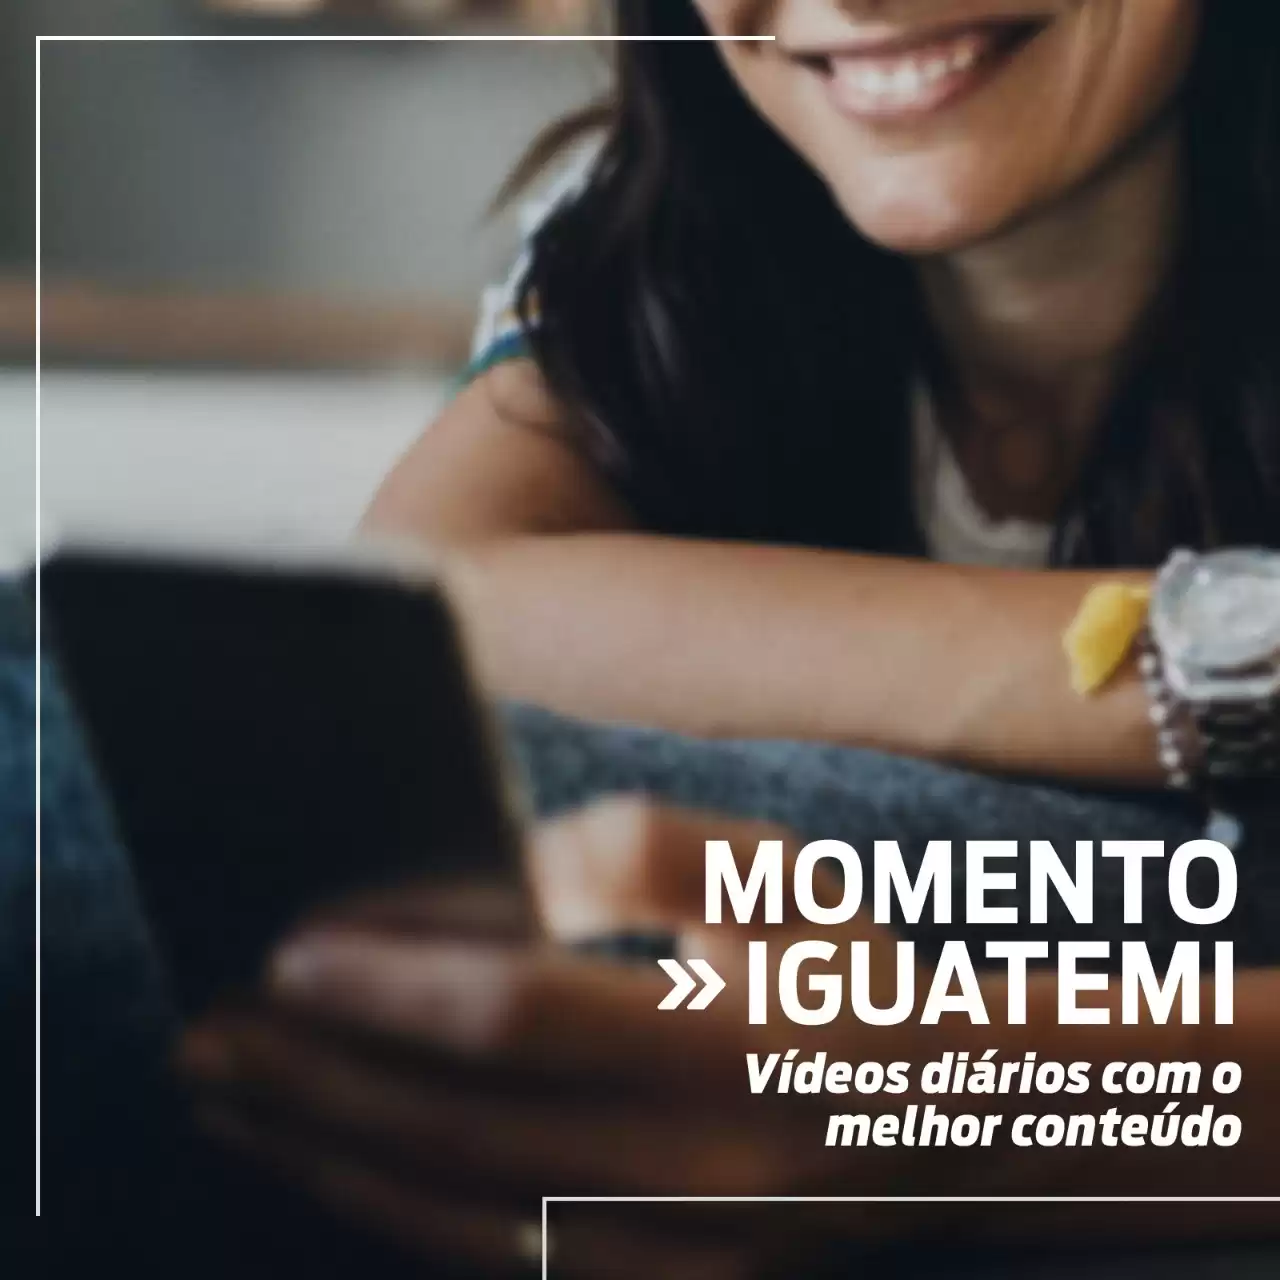 Iguatemi Florianópolis promove oficinas sobre saúde, estilo de vida e gastronomia nas redes sociais